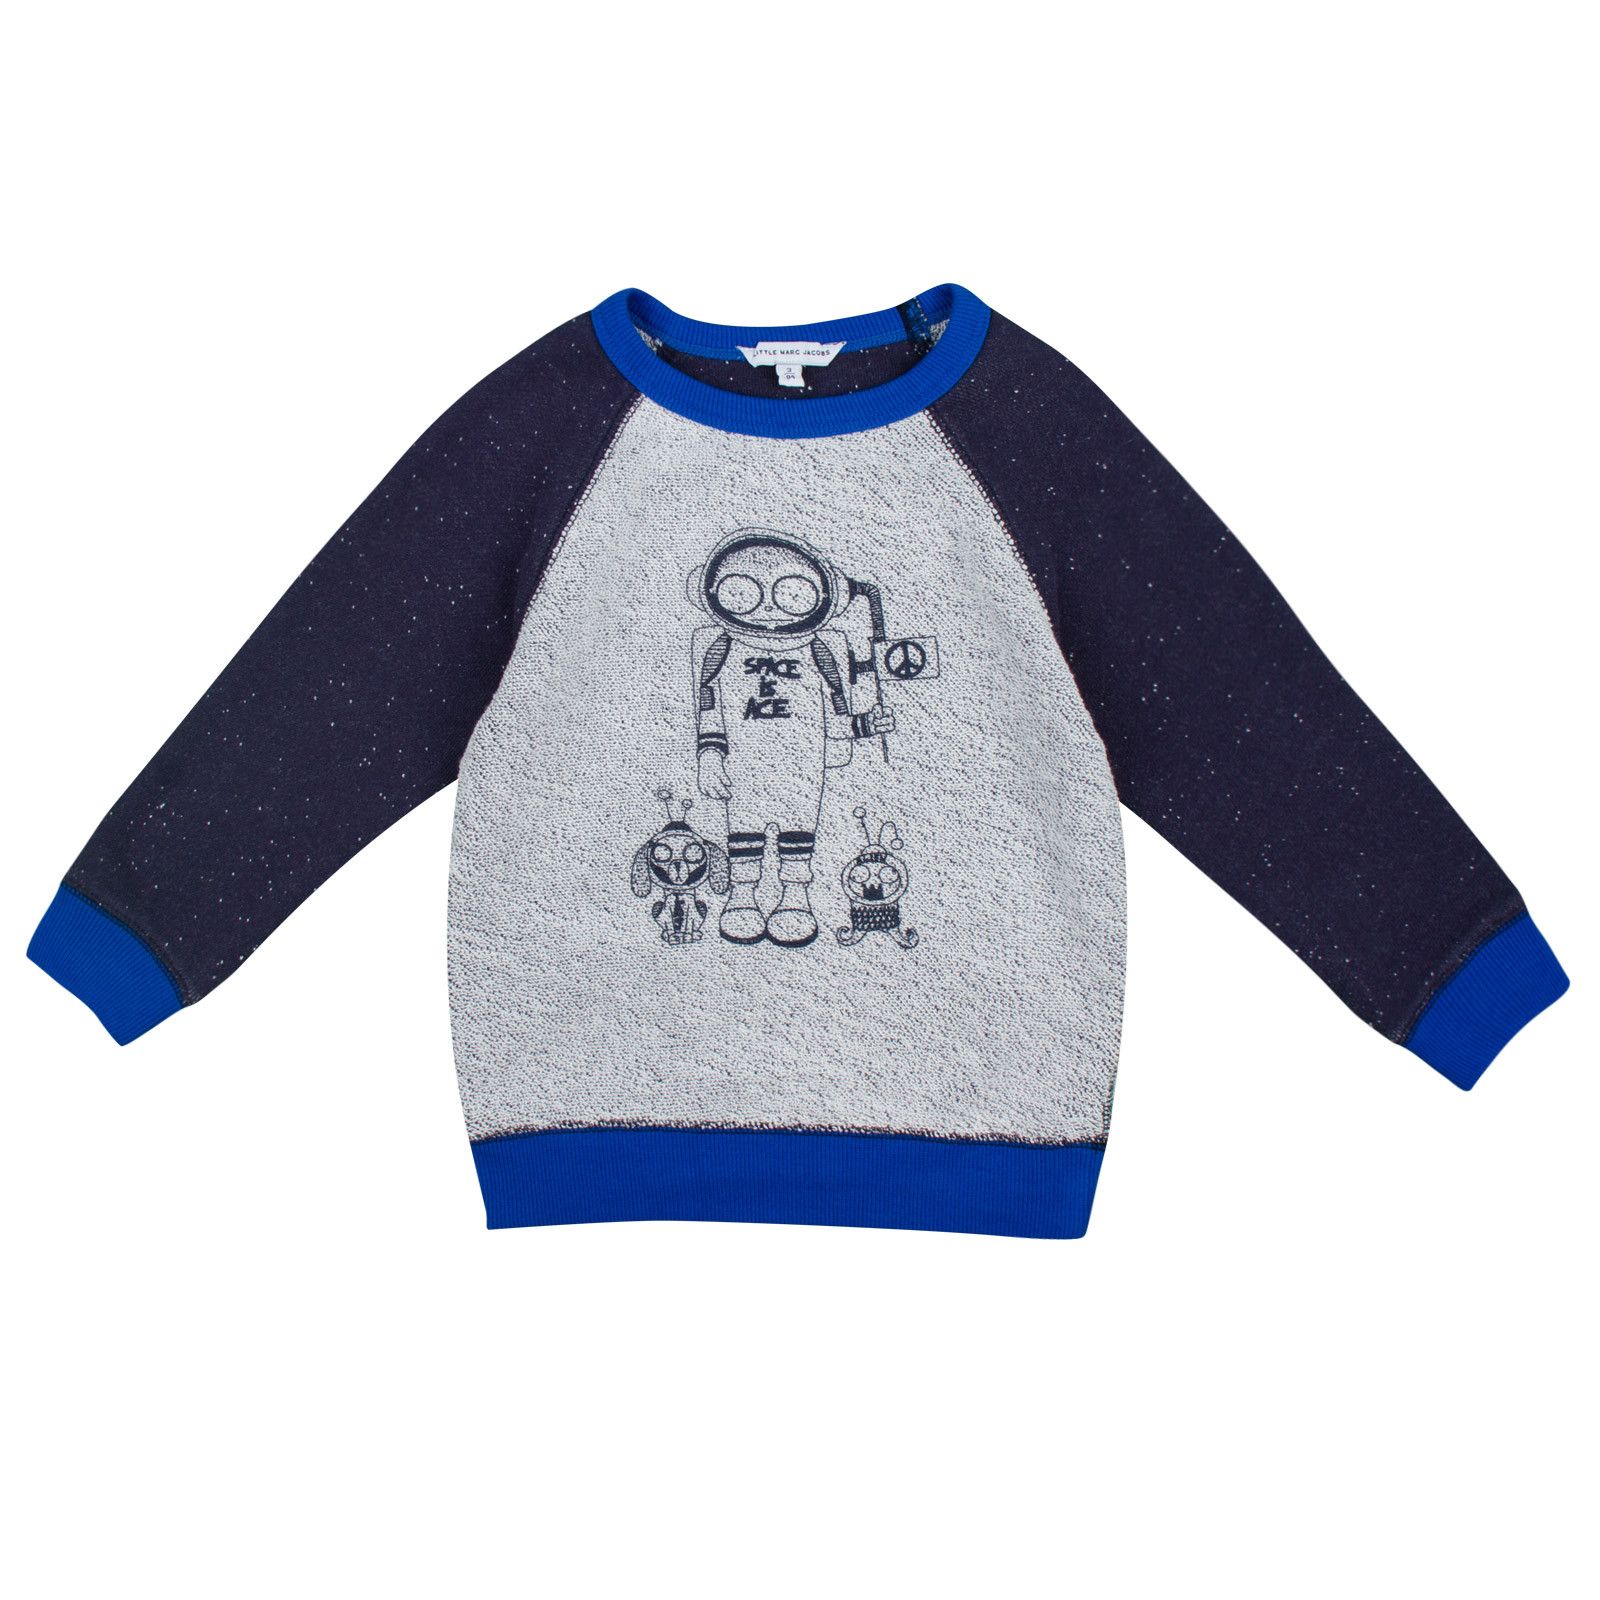 Boys Grey&Blue 'Mr Marc' Spaceman Printed Sweater - CÉMAROSE | Children's Fashion Store - 1